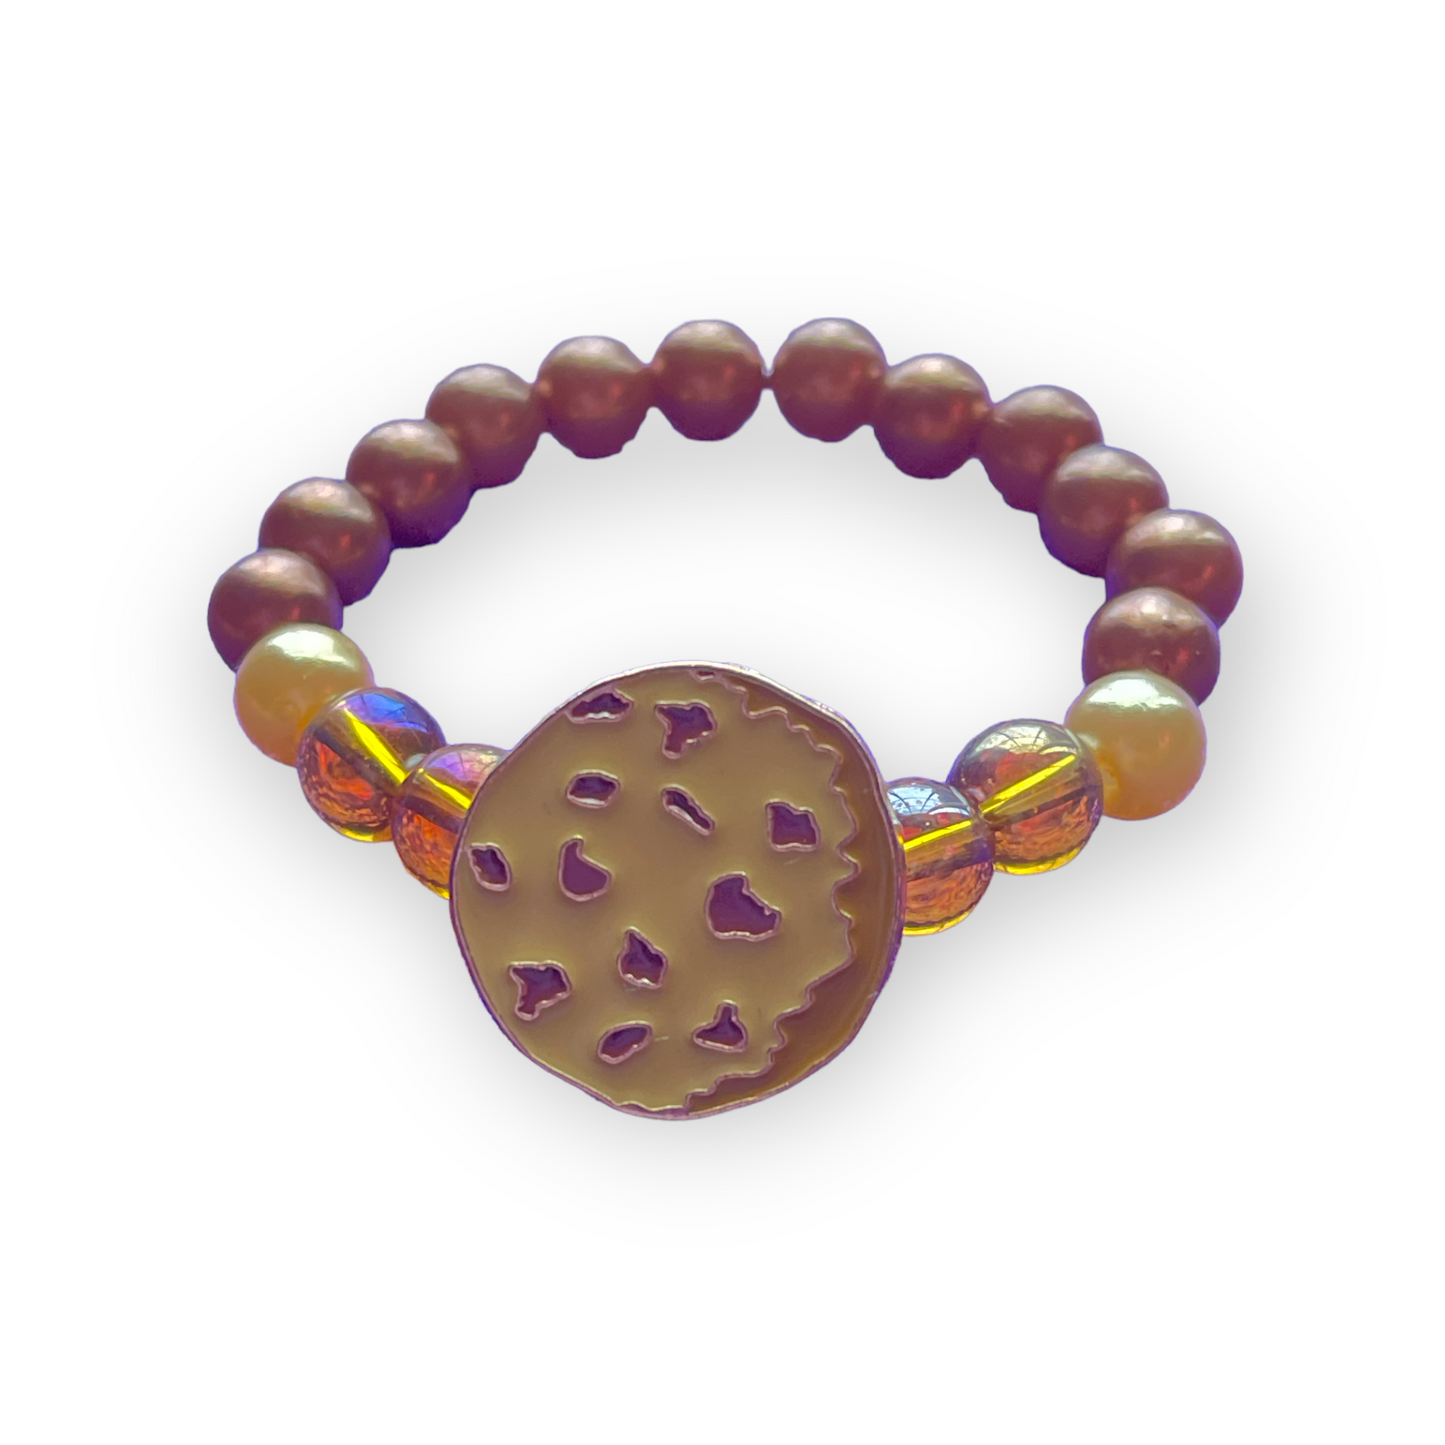 Chocolate chip cookie bracelet